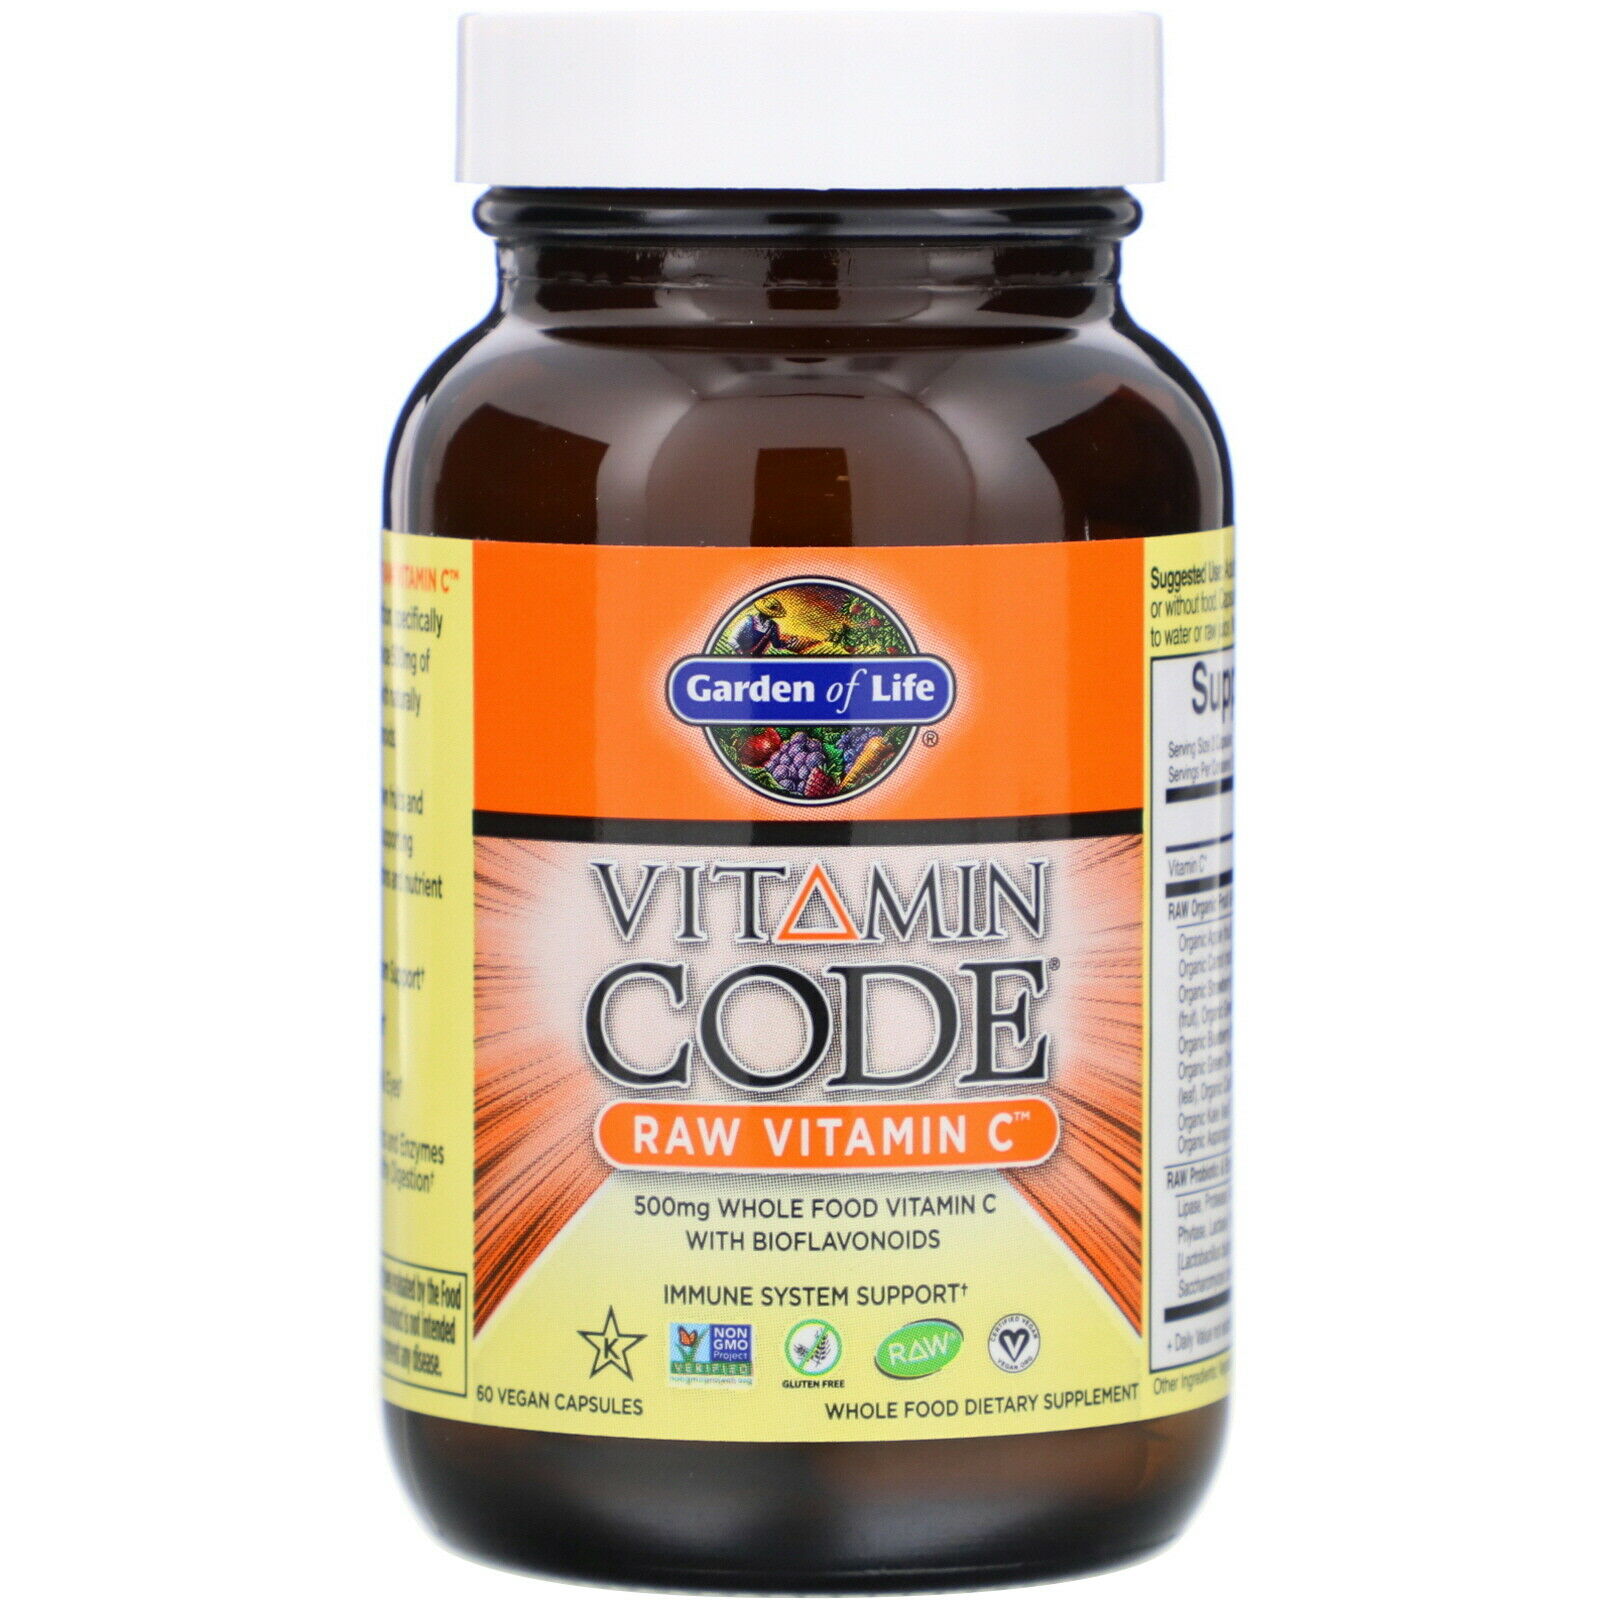 Best vitamin c. Витамином с Life Vitamin. Витамин Гарден. Garden of Life витамины. Raw витамины.